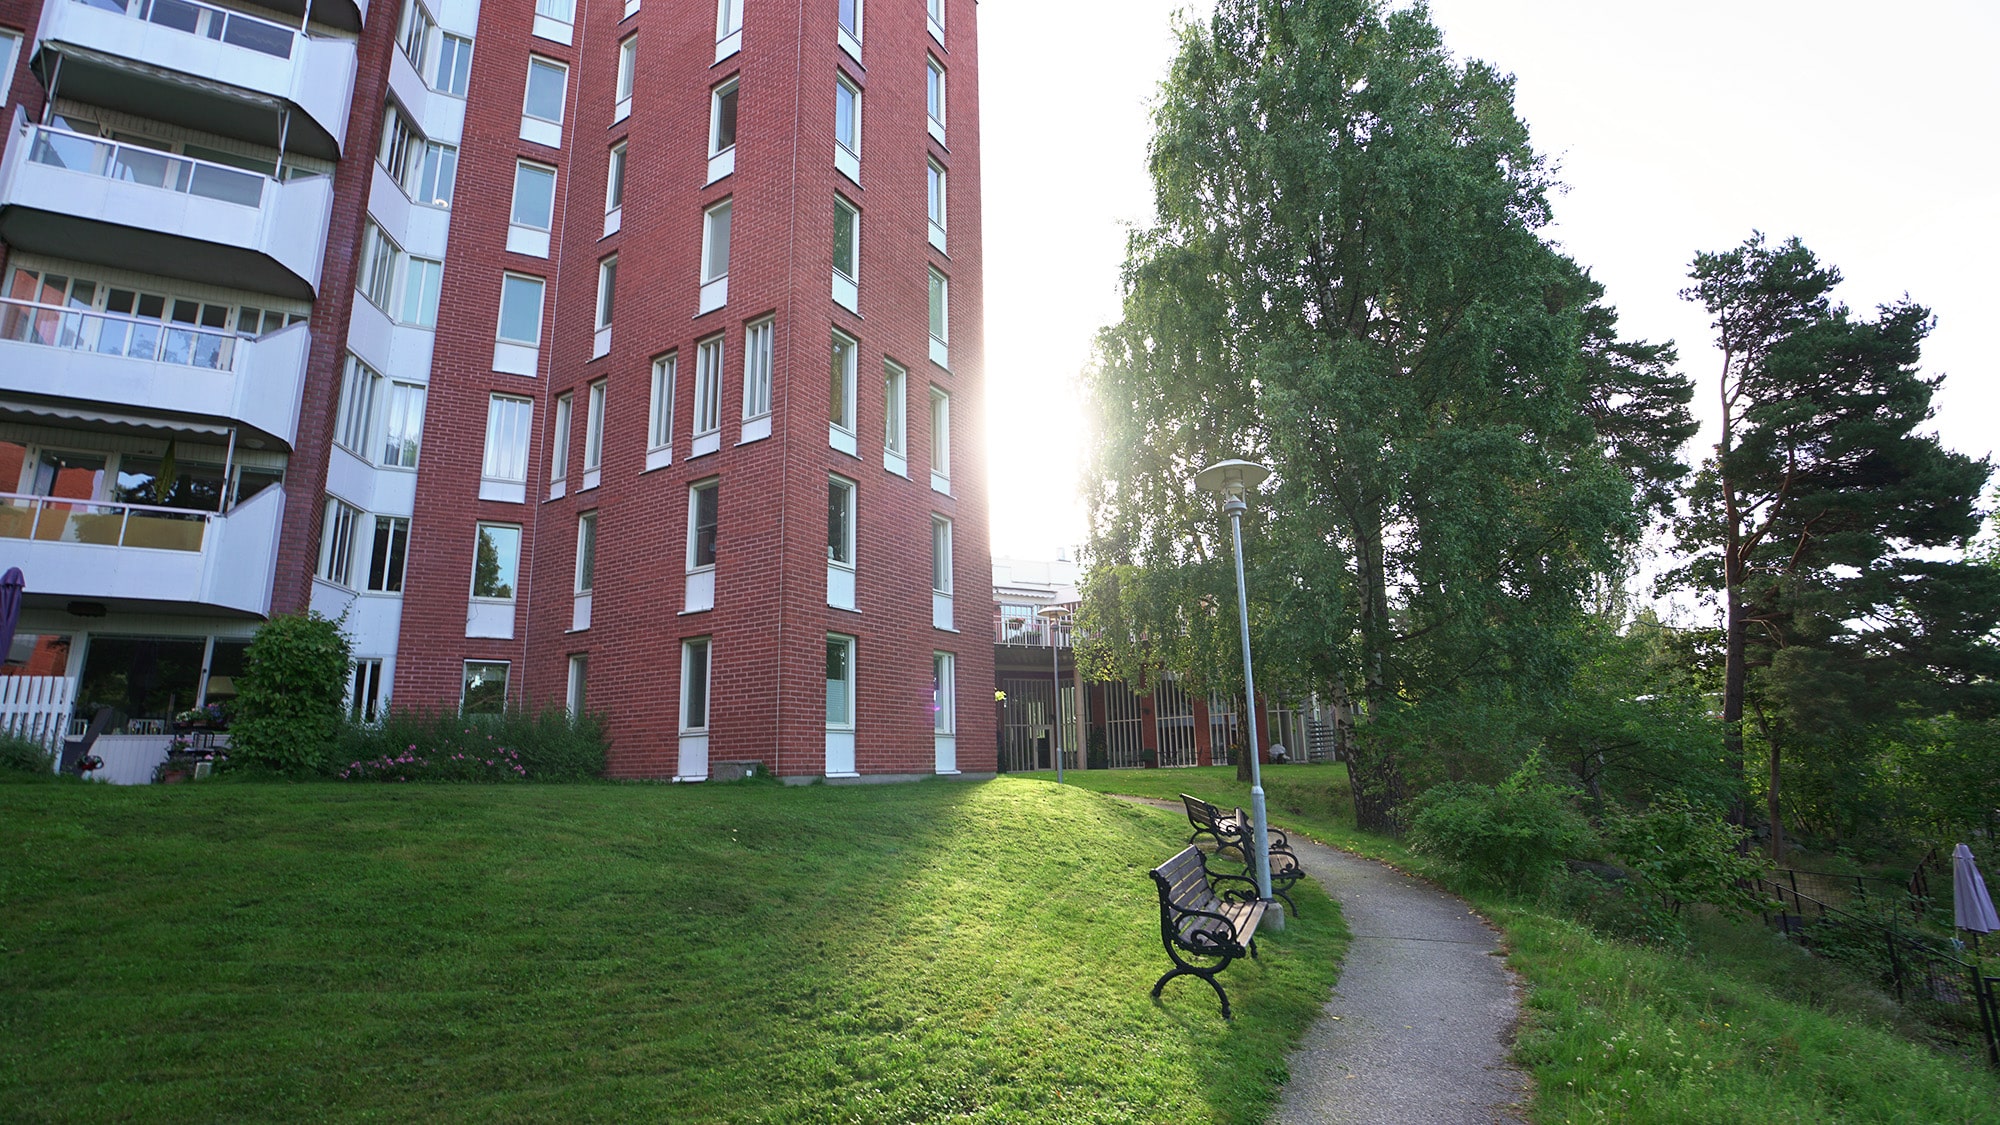 SVPH - Lägenheter - Seniorboende +55 - Fredhäll - Bromma Strand - Nockebyhus - En klok idé